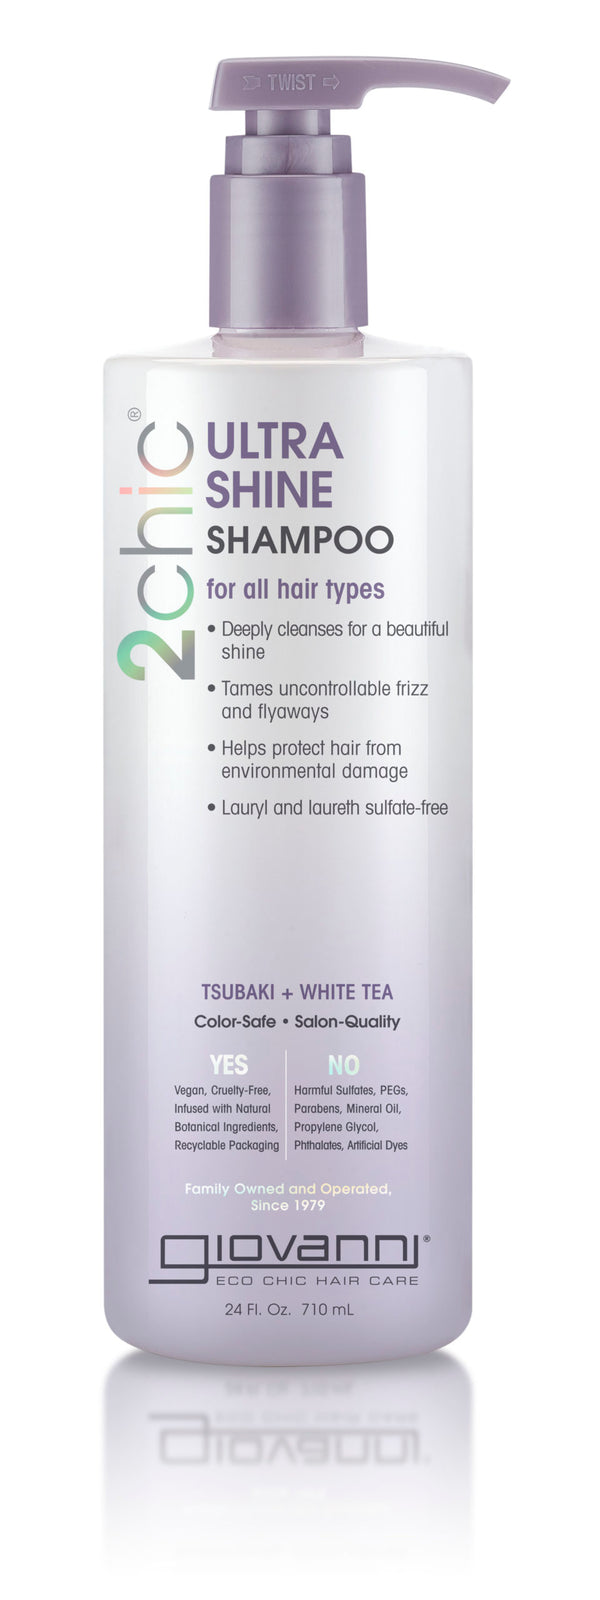 Giovanni Cosmetics 2chic - Ultra-Shine Shampoo with Tsubaki & White Tea